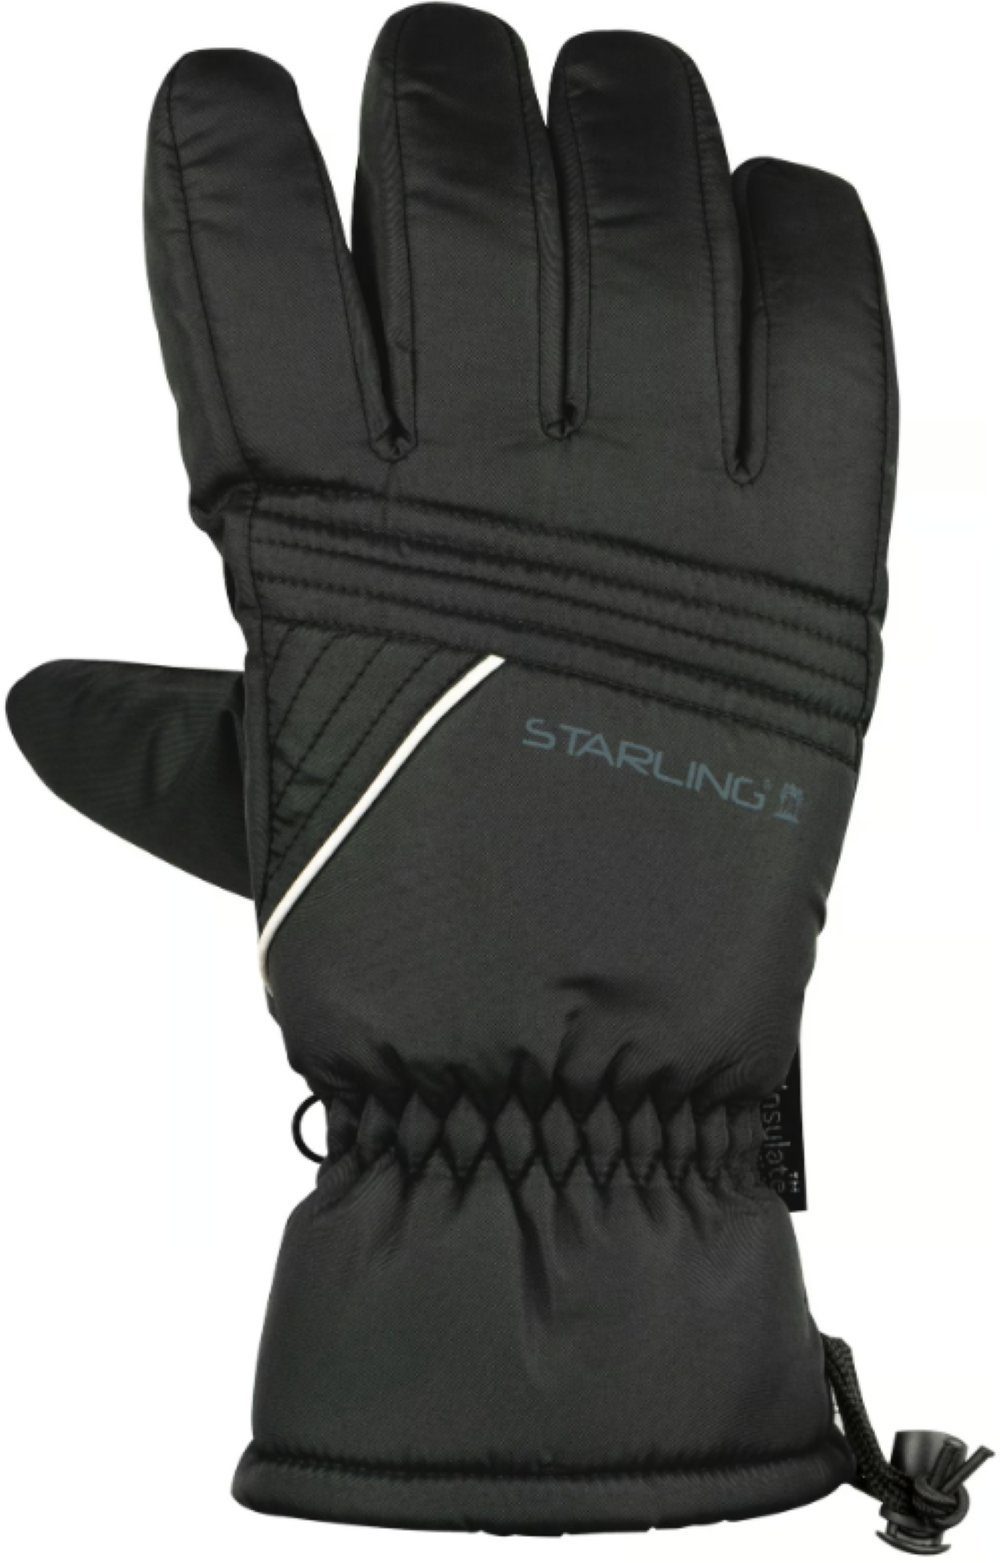 STARLING Skihandschuhe 3M Snowboard-Handschuhe Herren • Größe 9 •Thinsulate Wärme-Isolation | Handschuhe